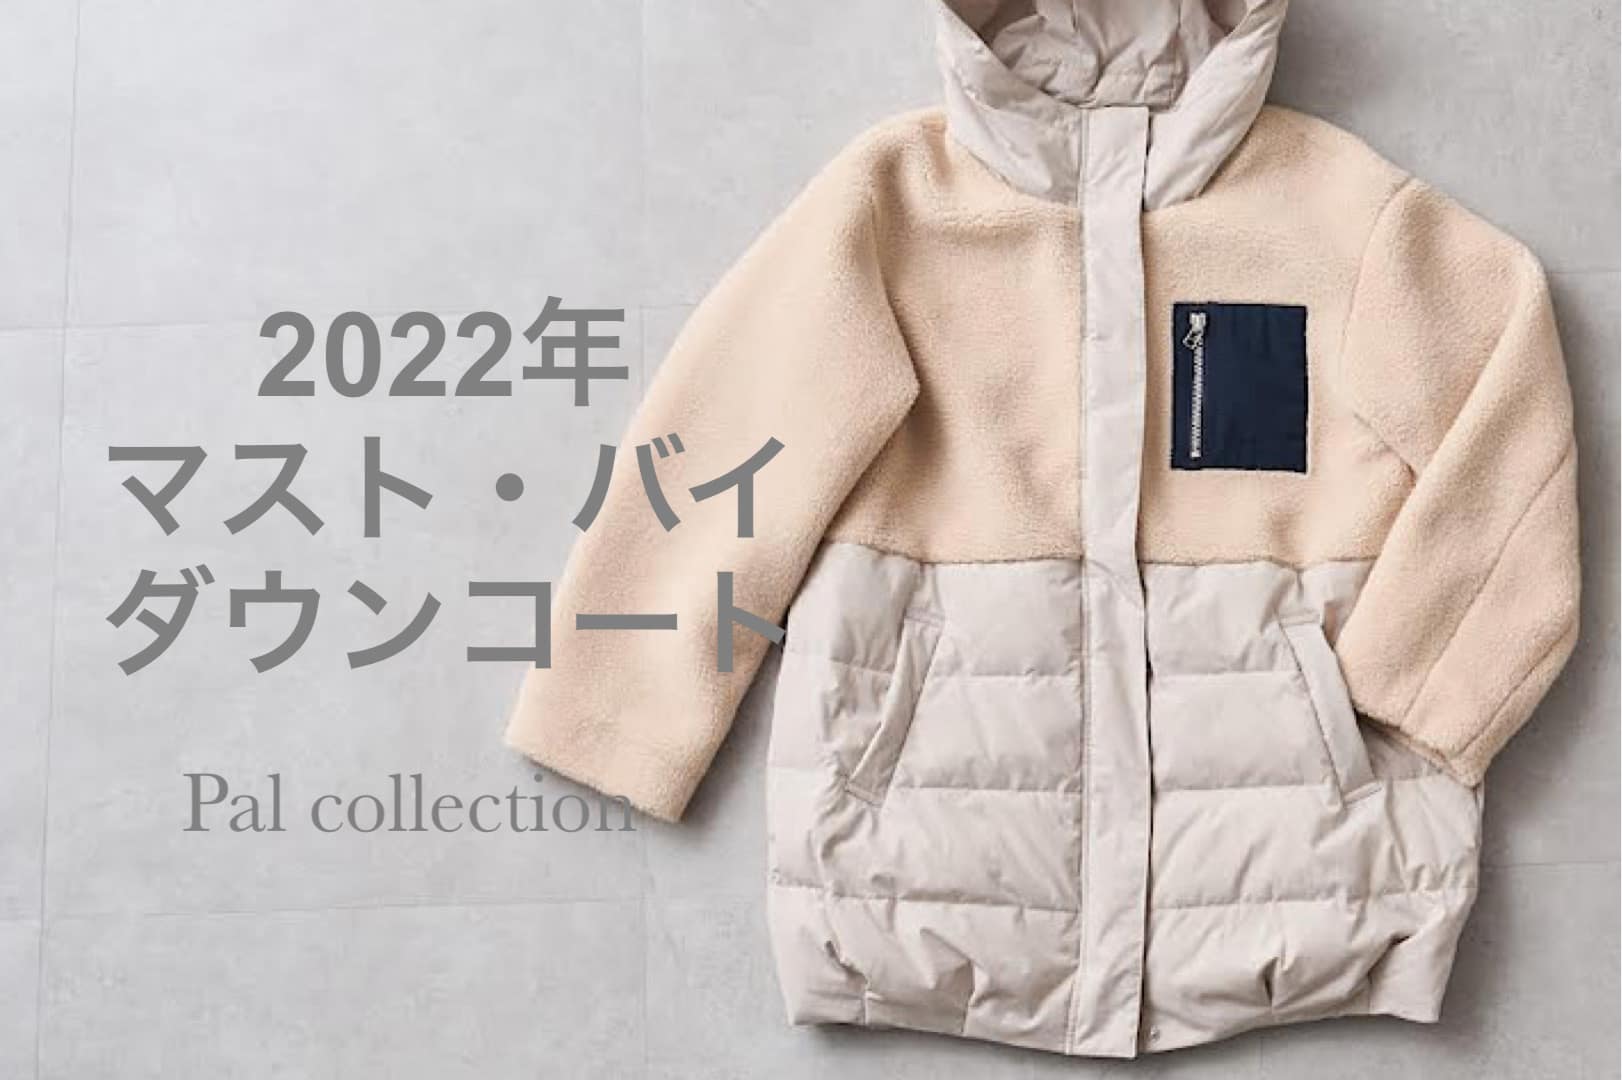 Pal collection 【2022年】マストバイのダウンコート